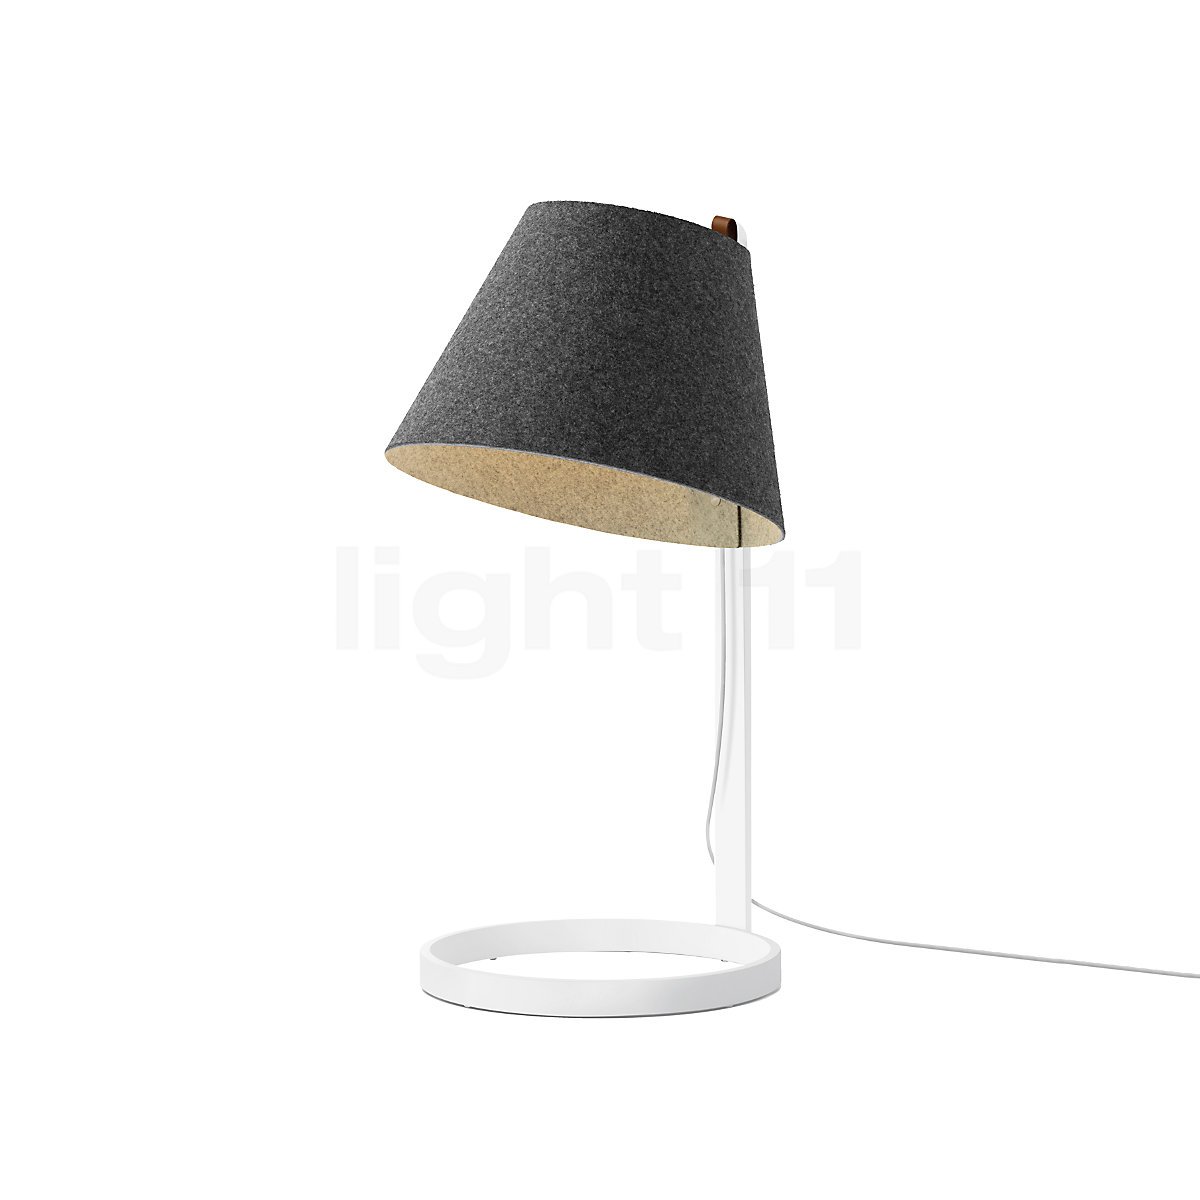 pablo table lamp